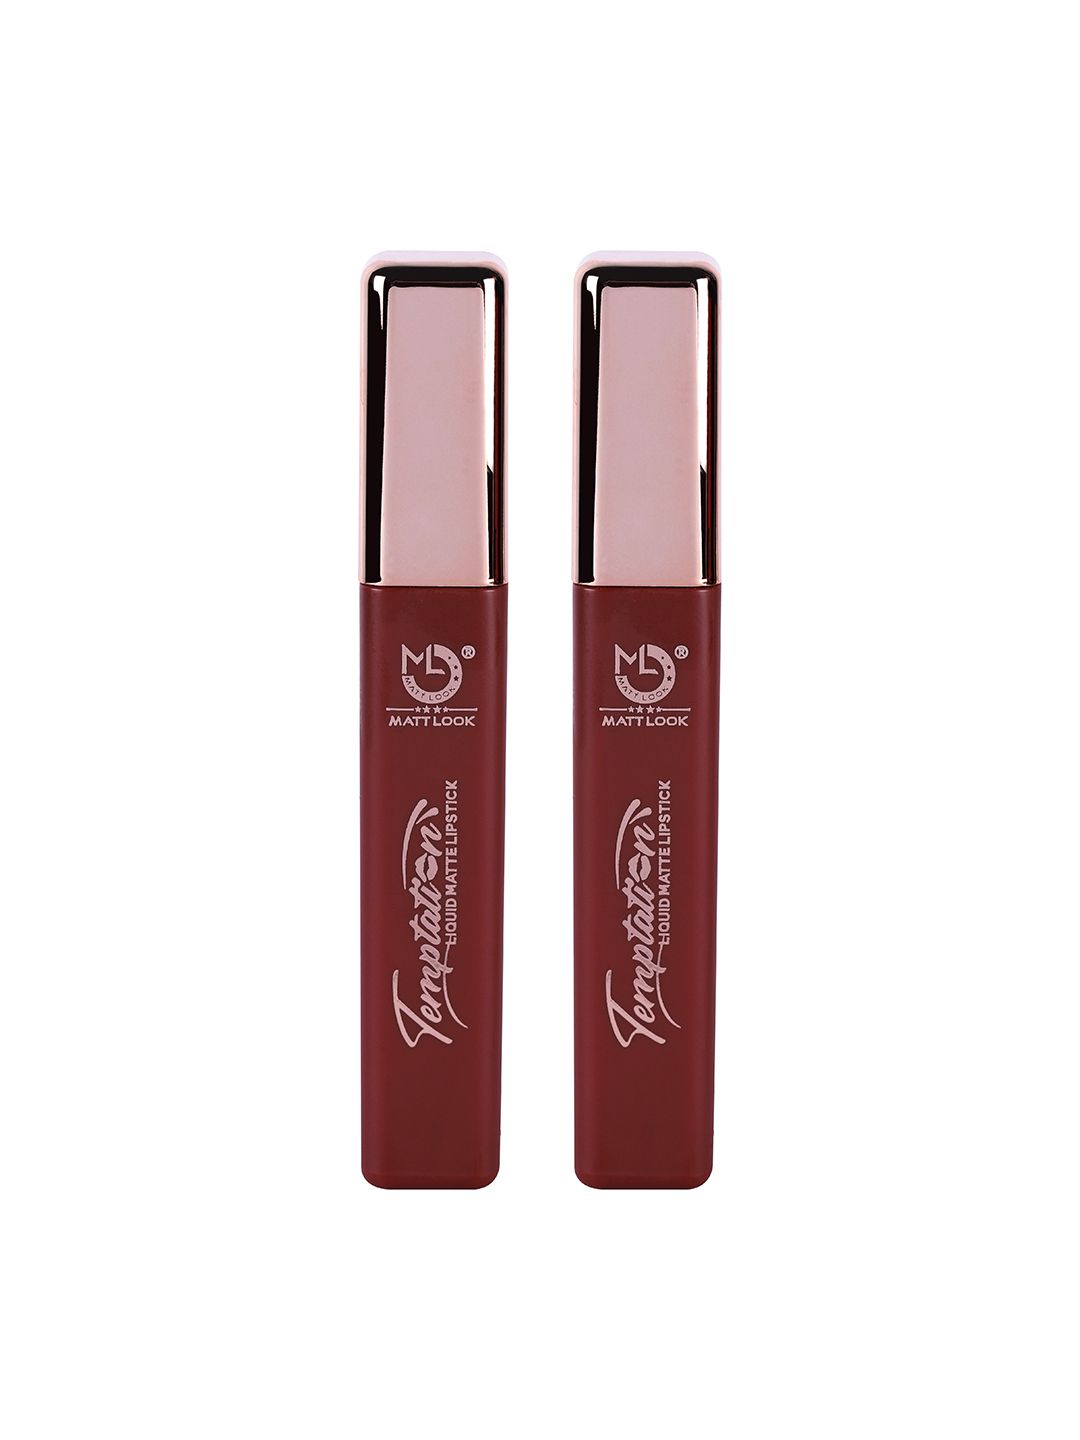 MATTLOOK Lip Makeup Temptation Liquid Matte Lipstick - 04 Wine (Pack of 2) Price in India